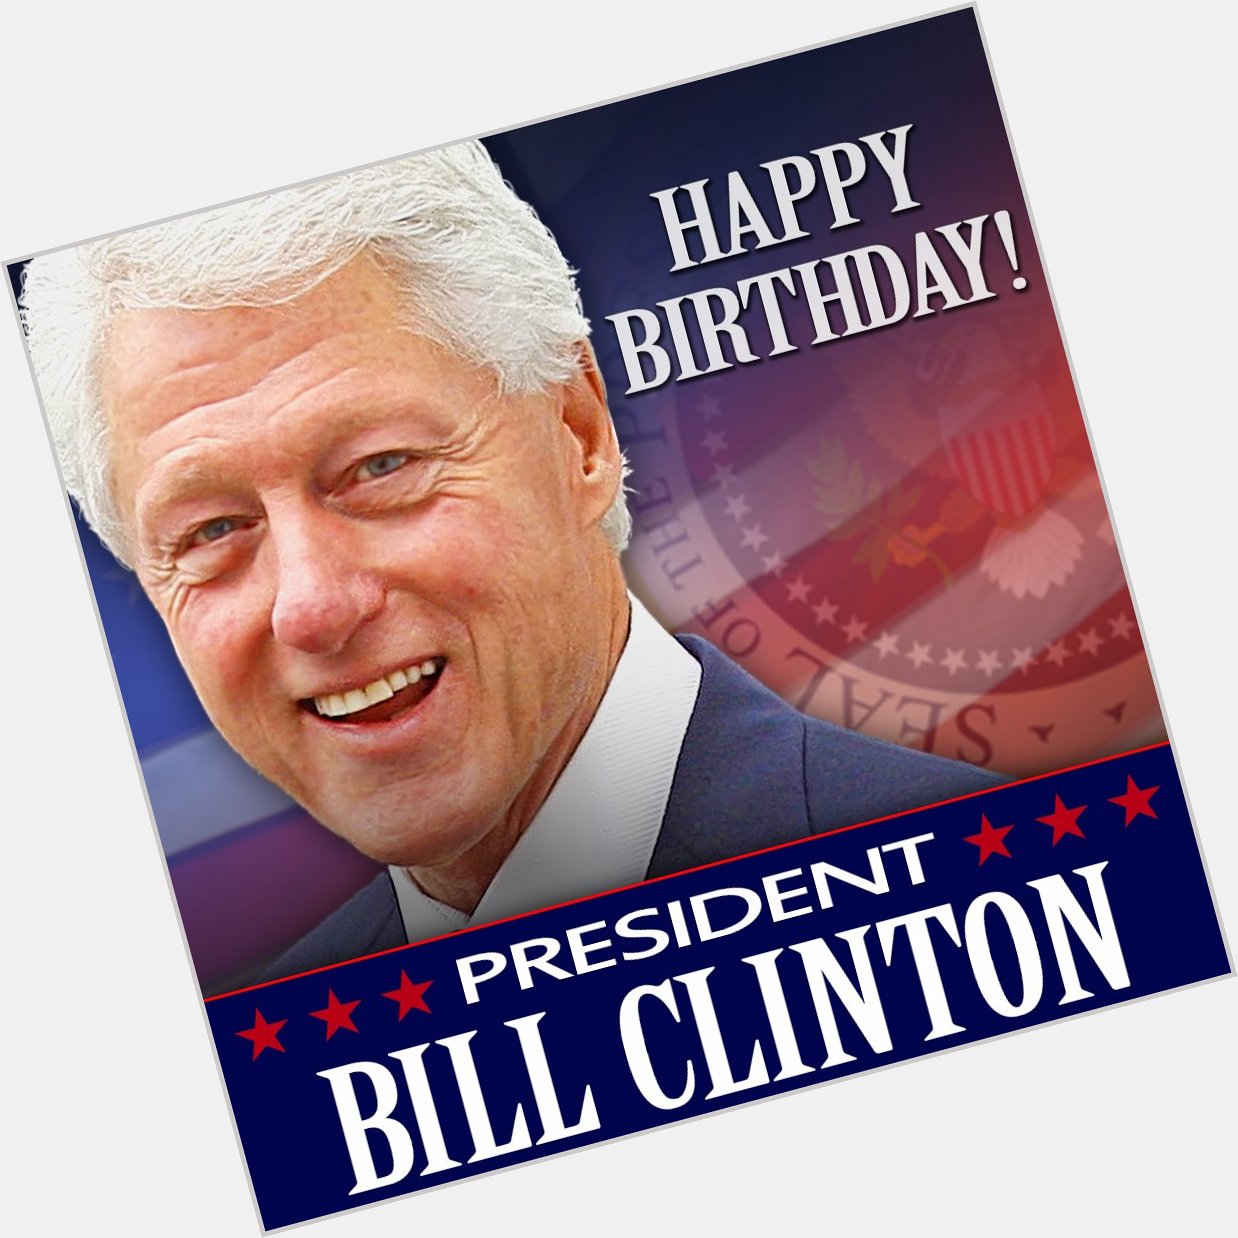 HAPPY BIRTHDAY! Former President Bill Clinton turns 72 today. 